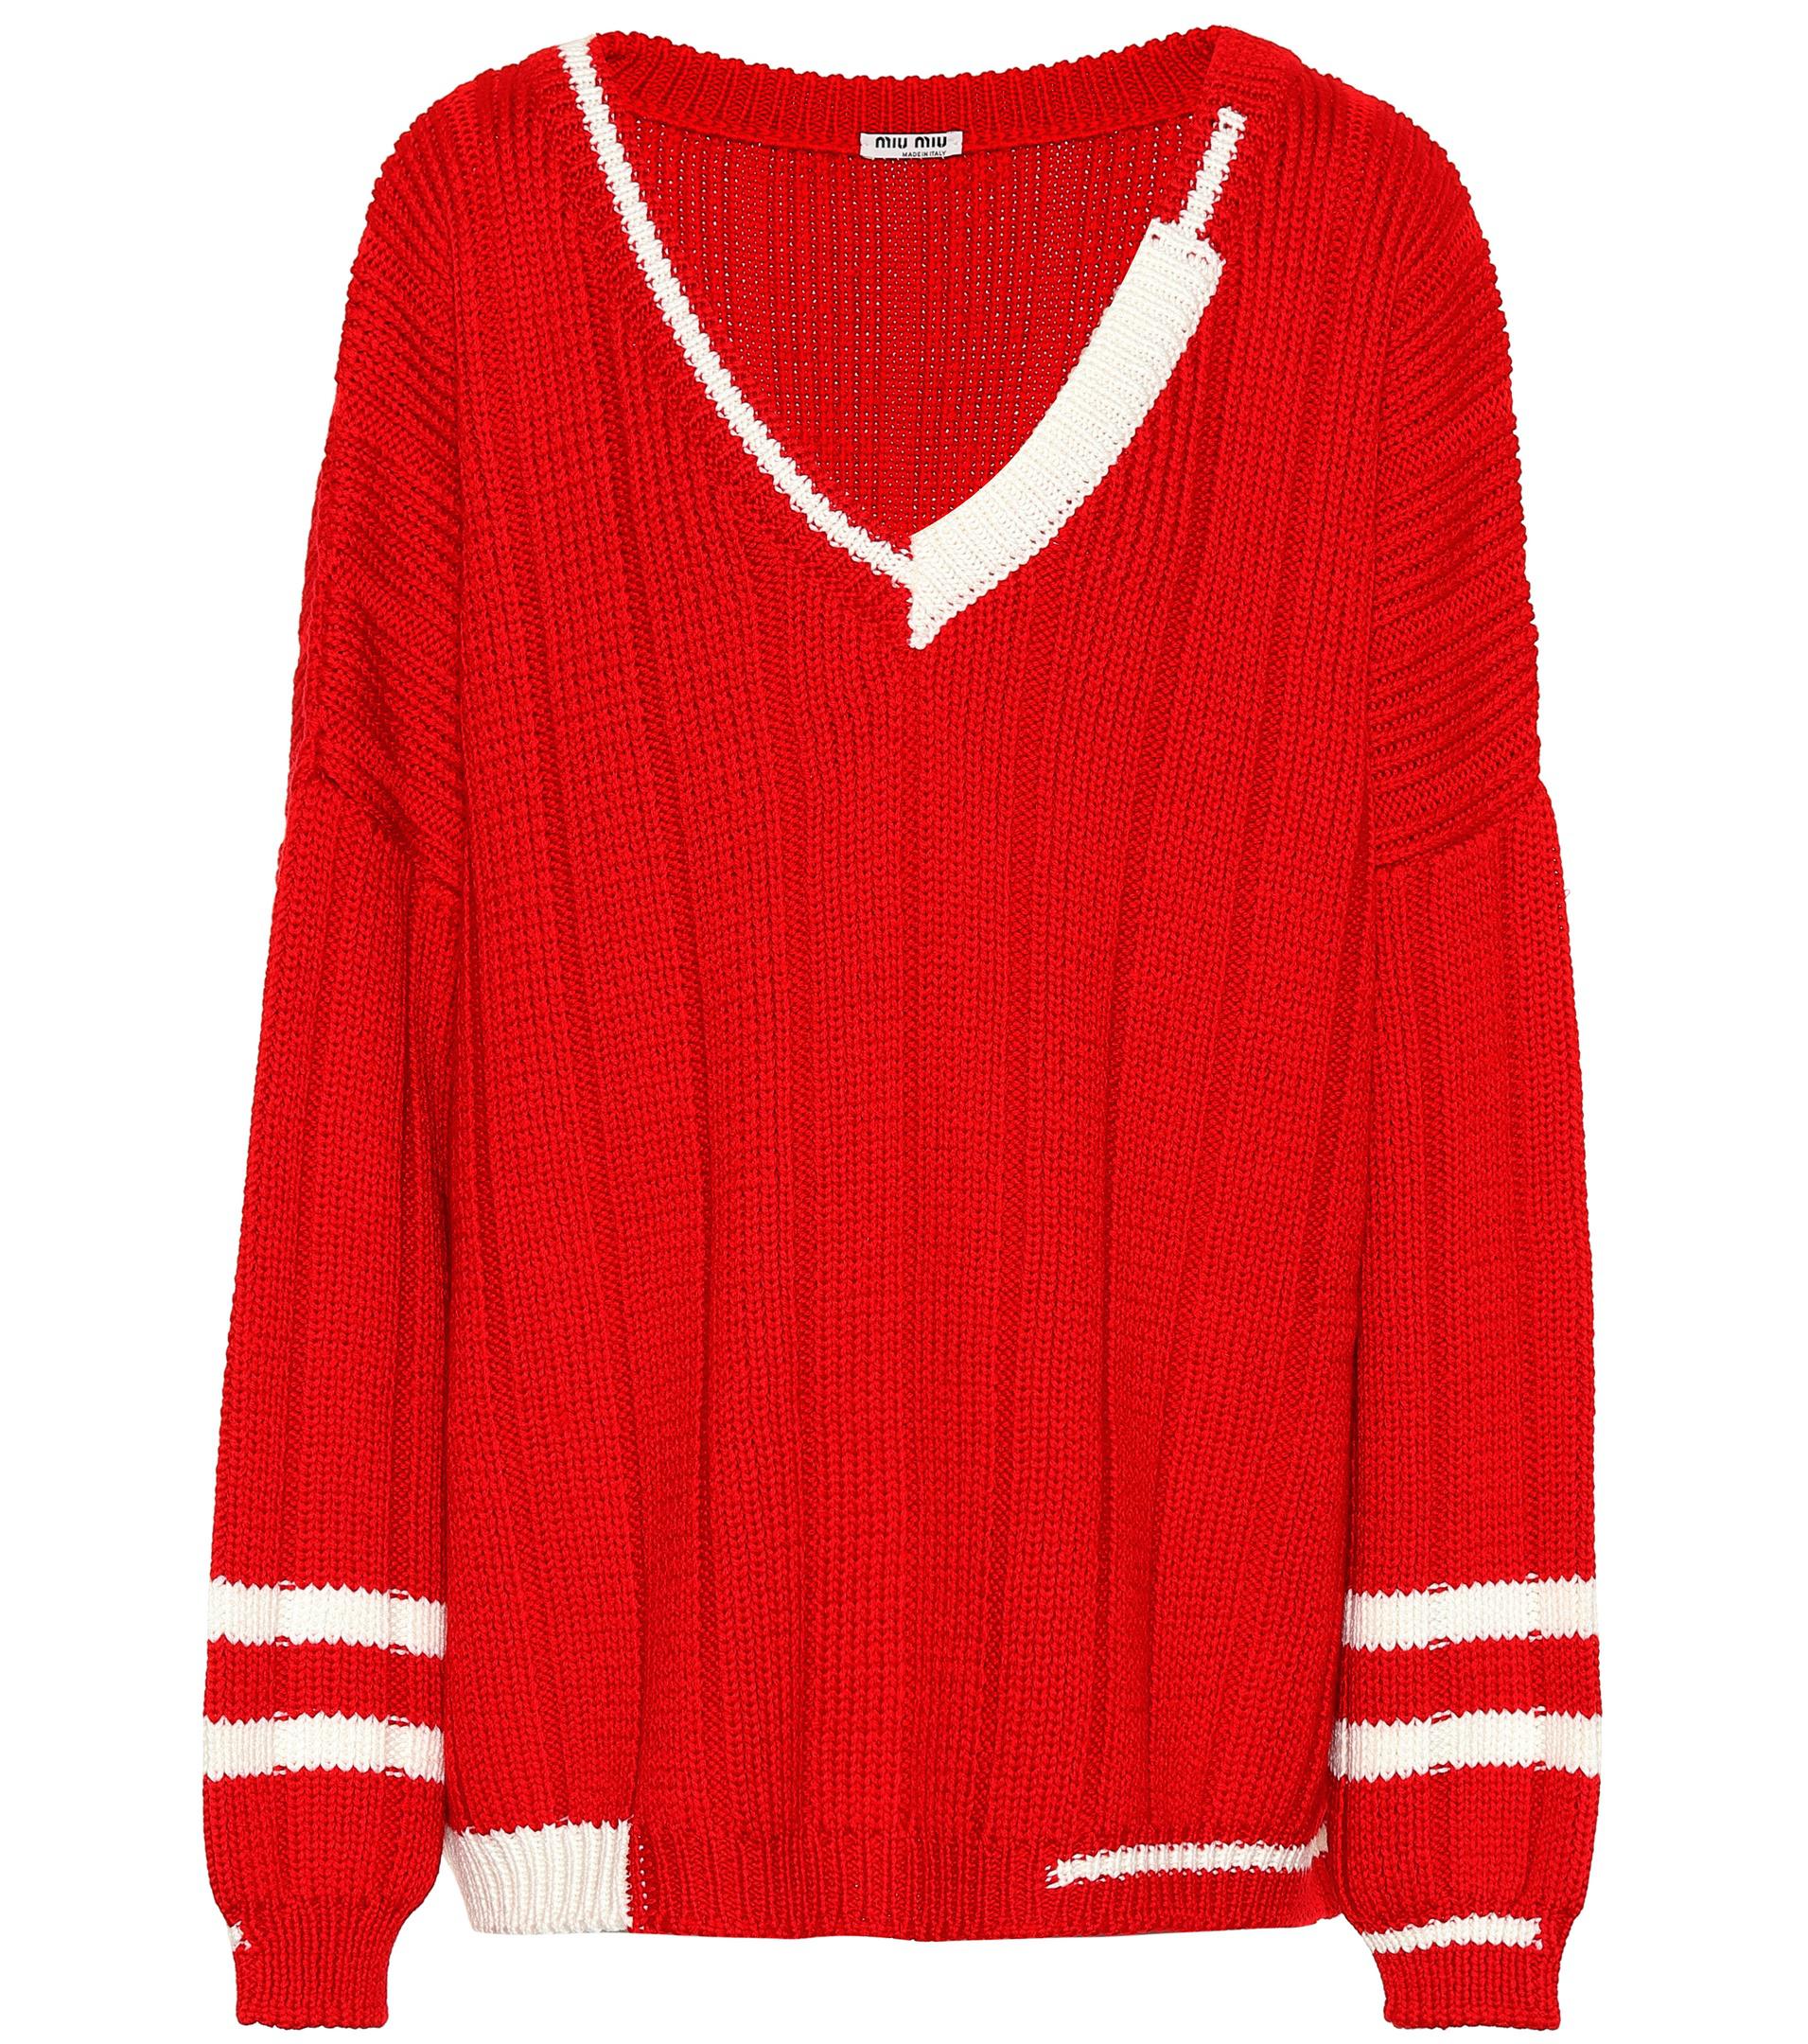 Miu Miu Knitted Wool Sweater in Red - Lyst